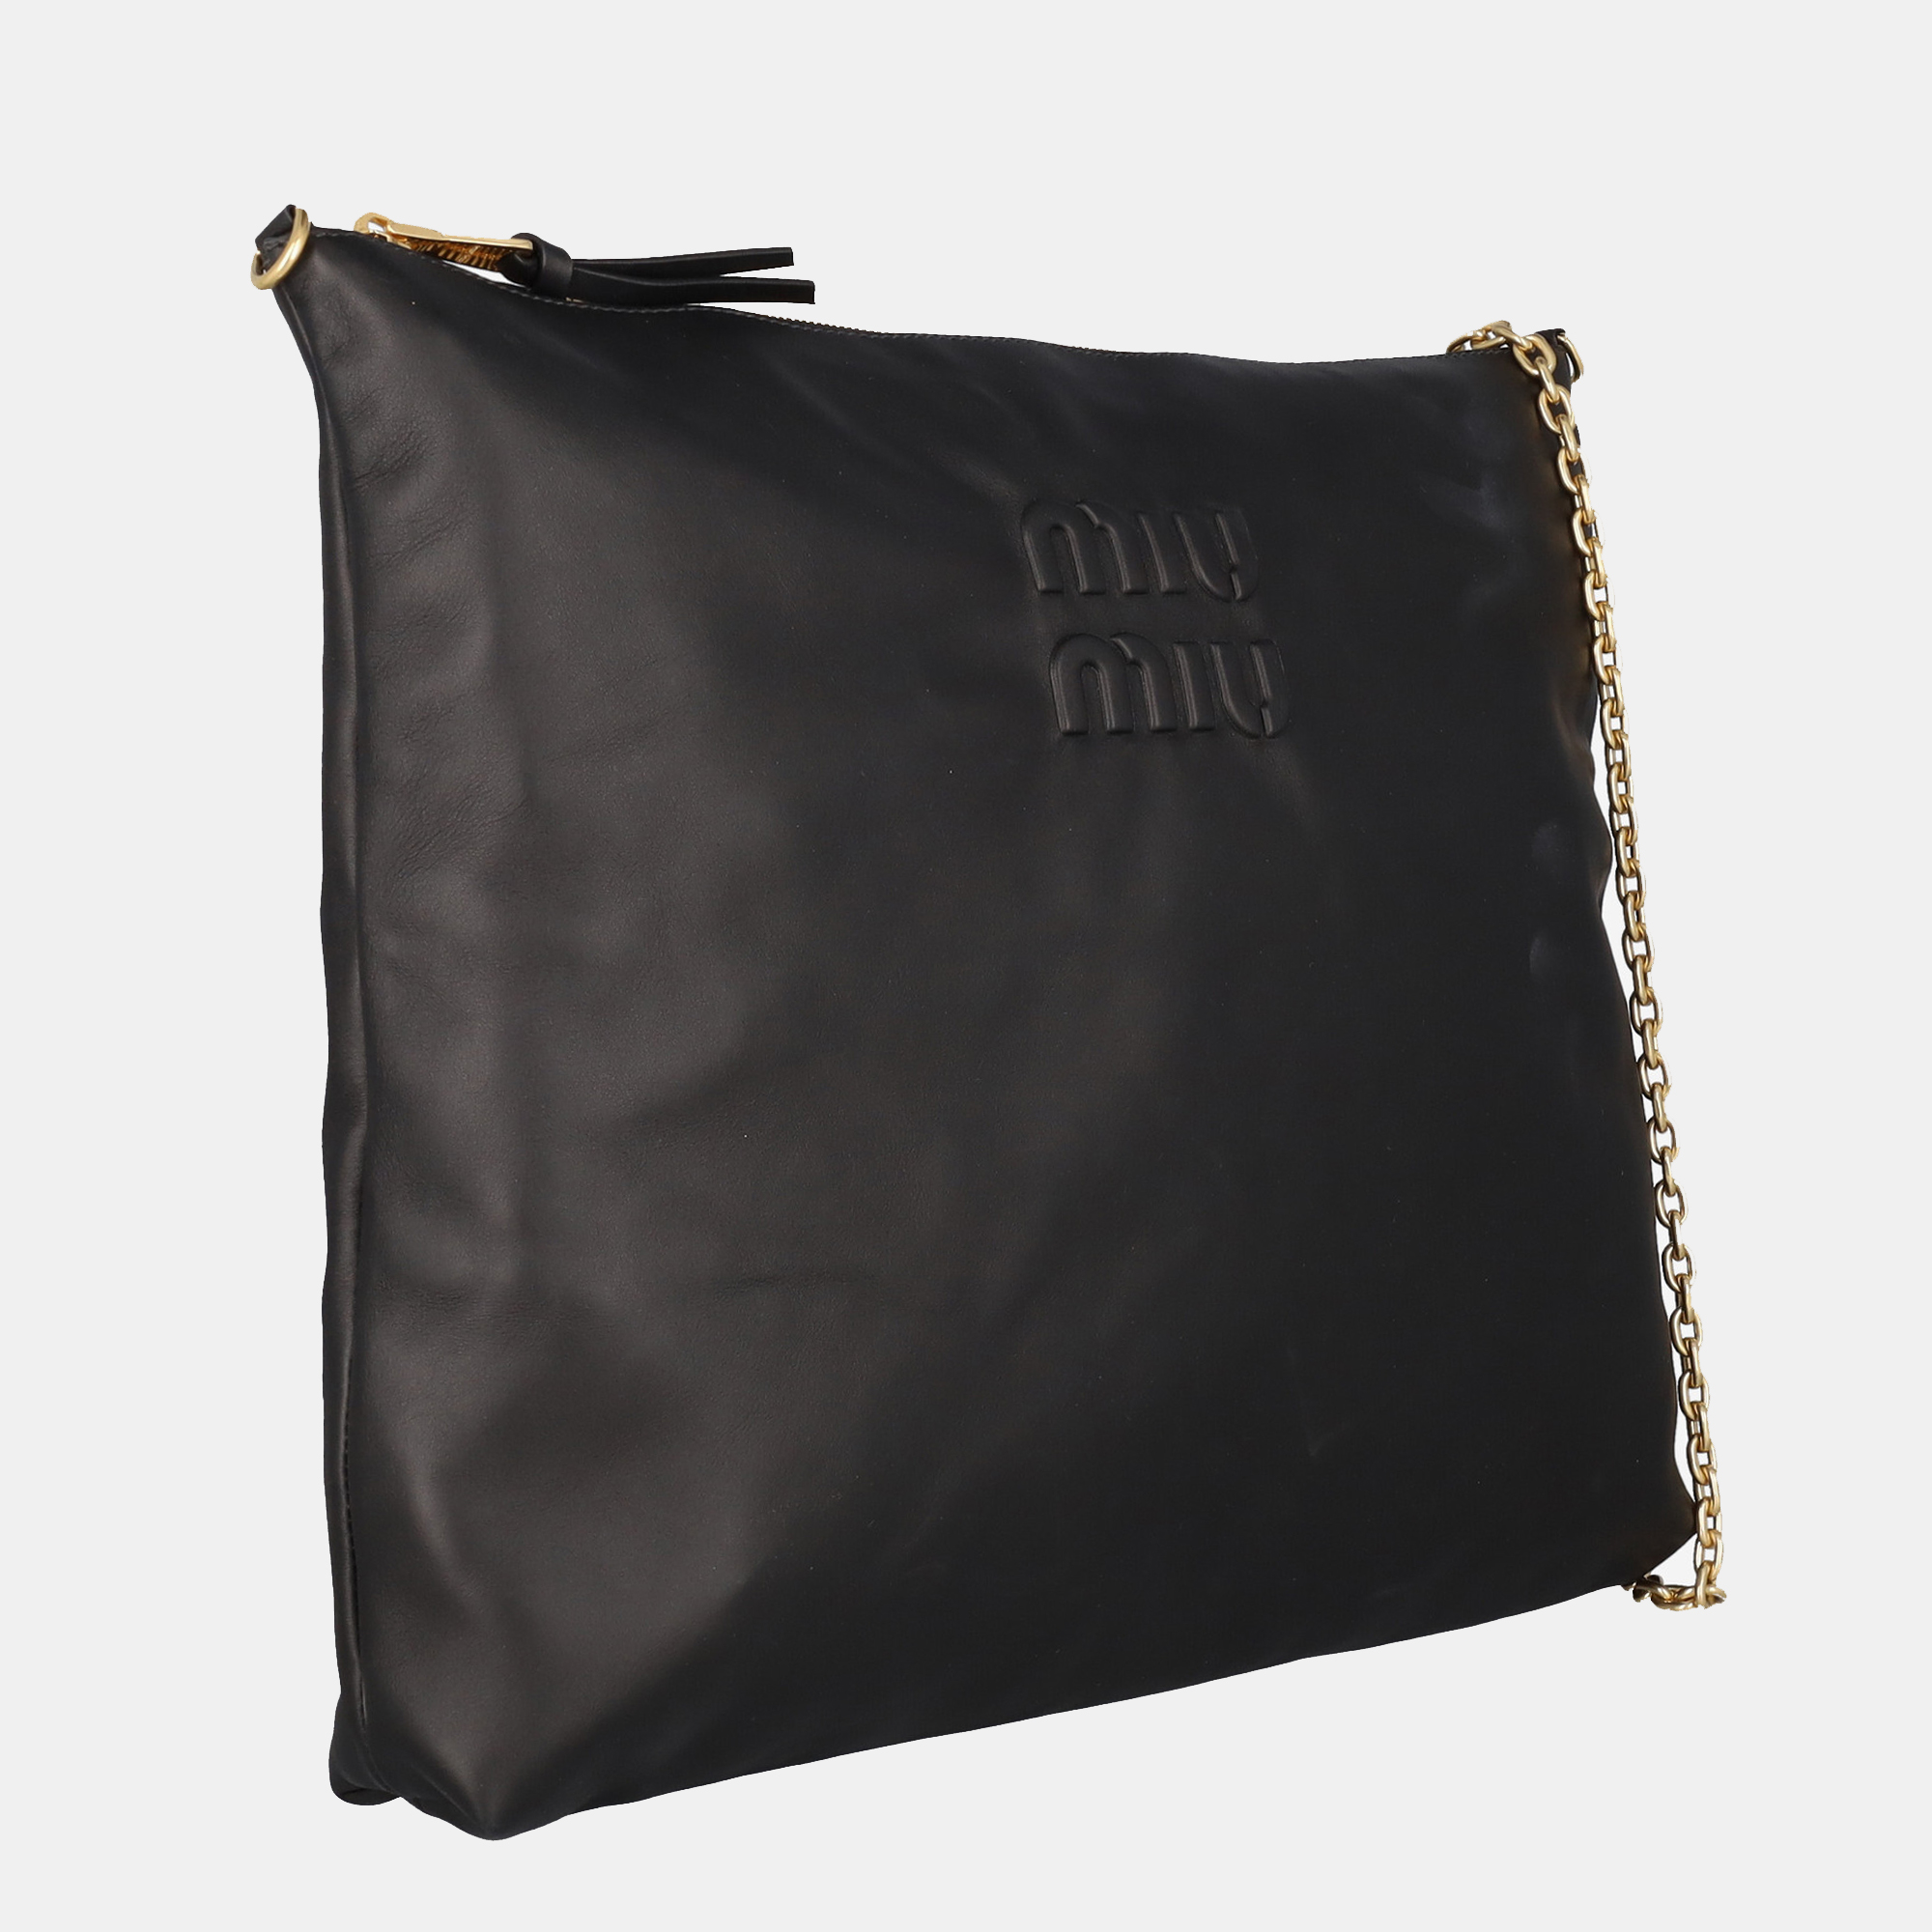 Miu Miu  Women's Leather Cross Body Bag - Black - One Size